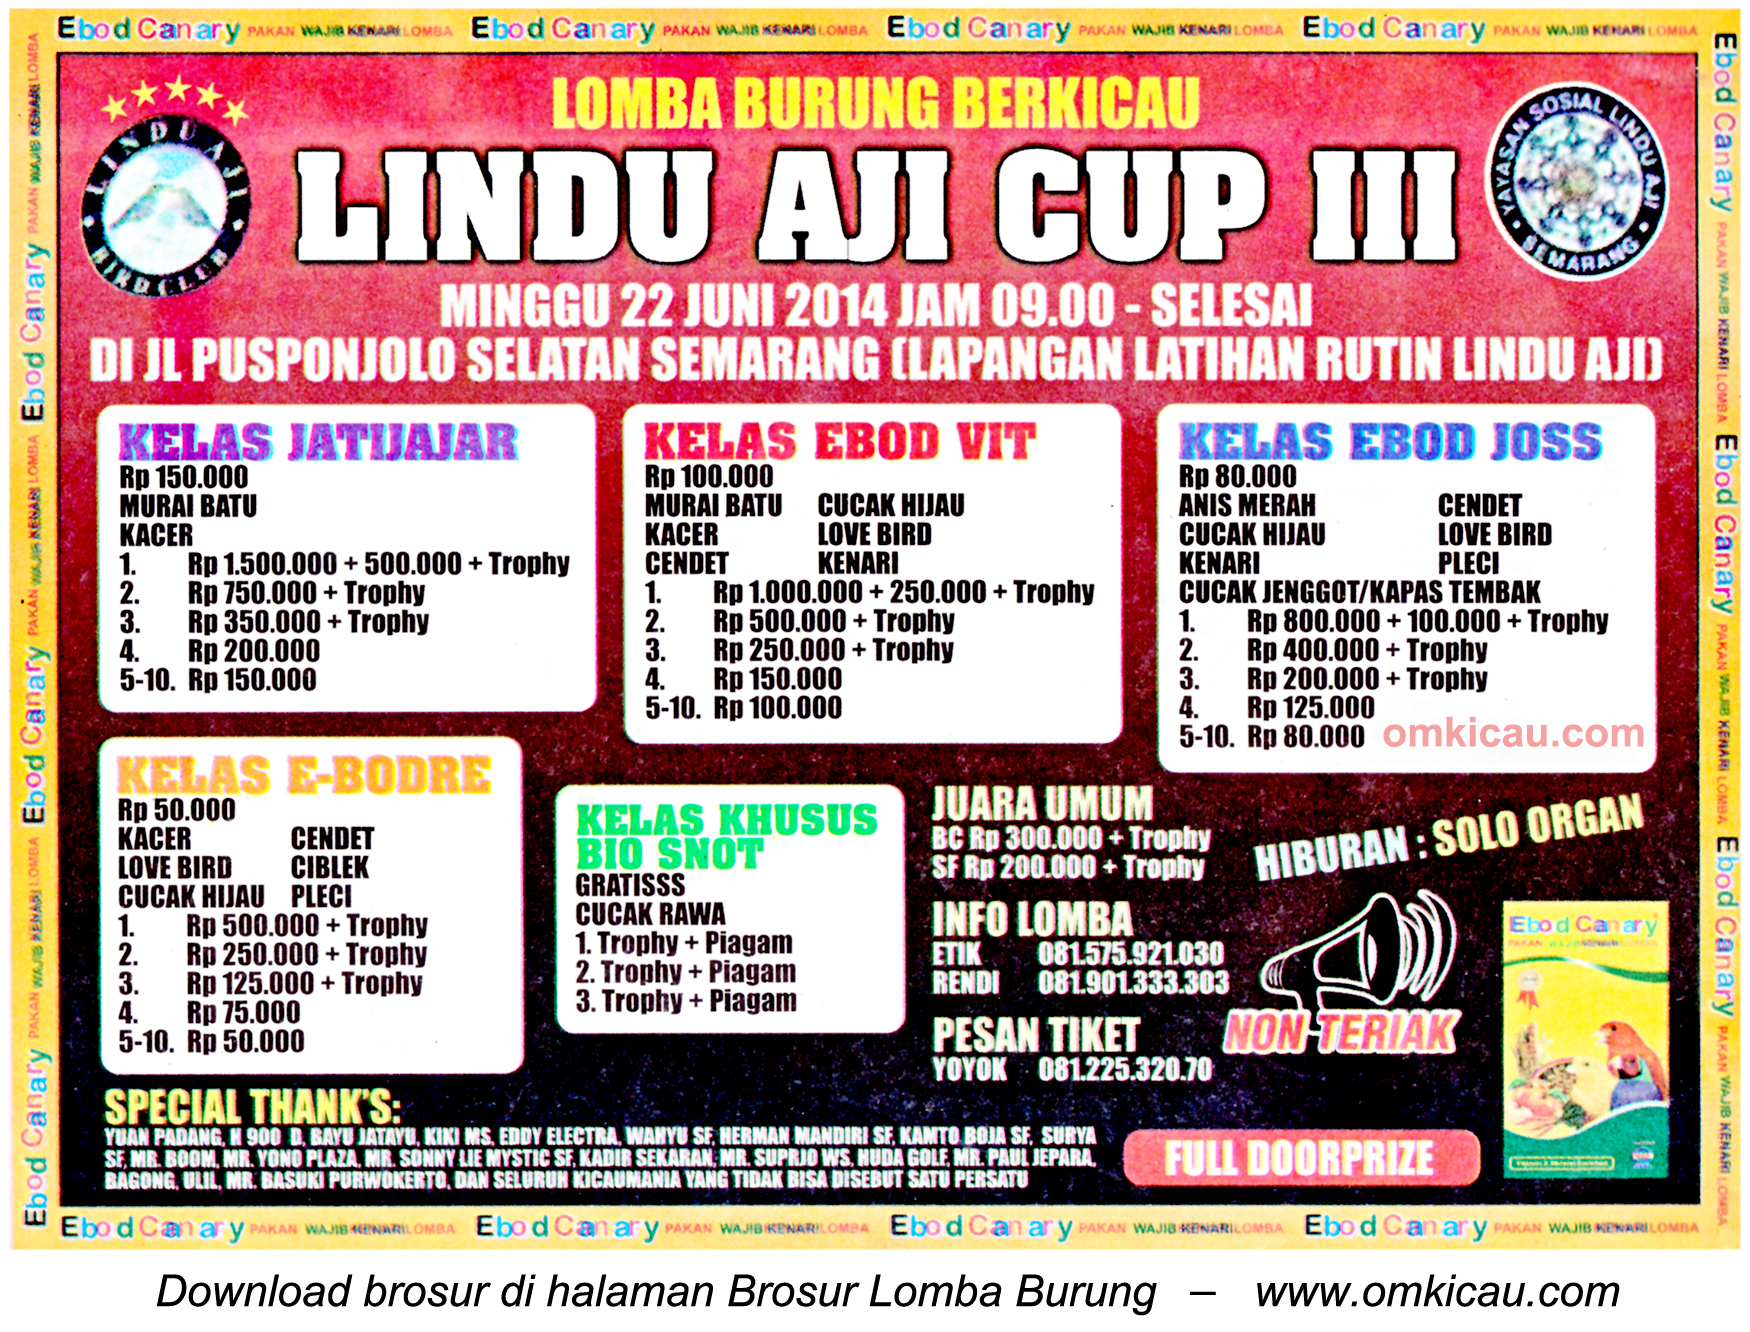 Brosur Lomba Burung Berkicau Lindu Aji Cup III, Semarang, 22 Juni 2014